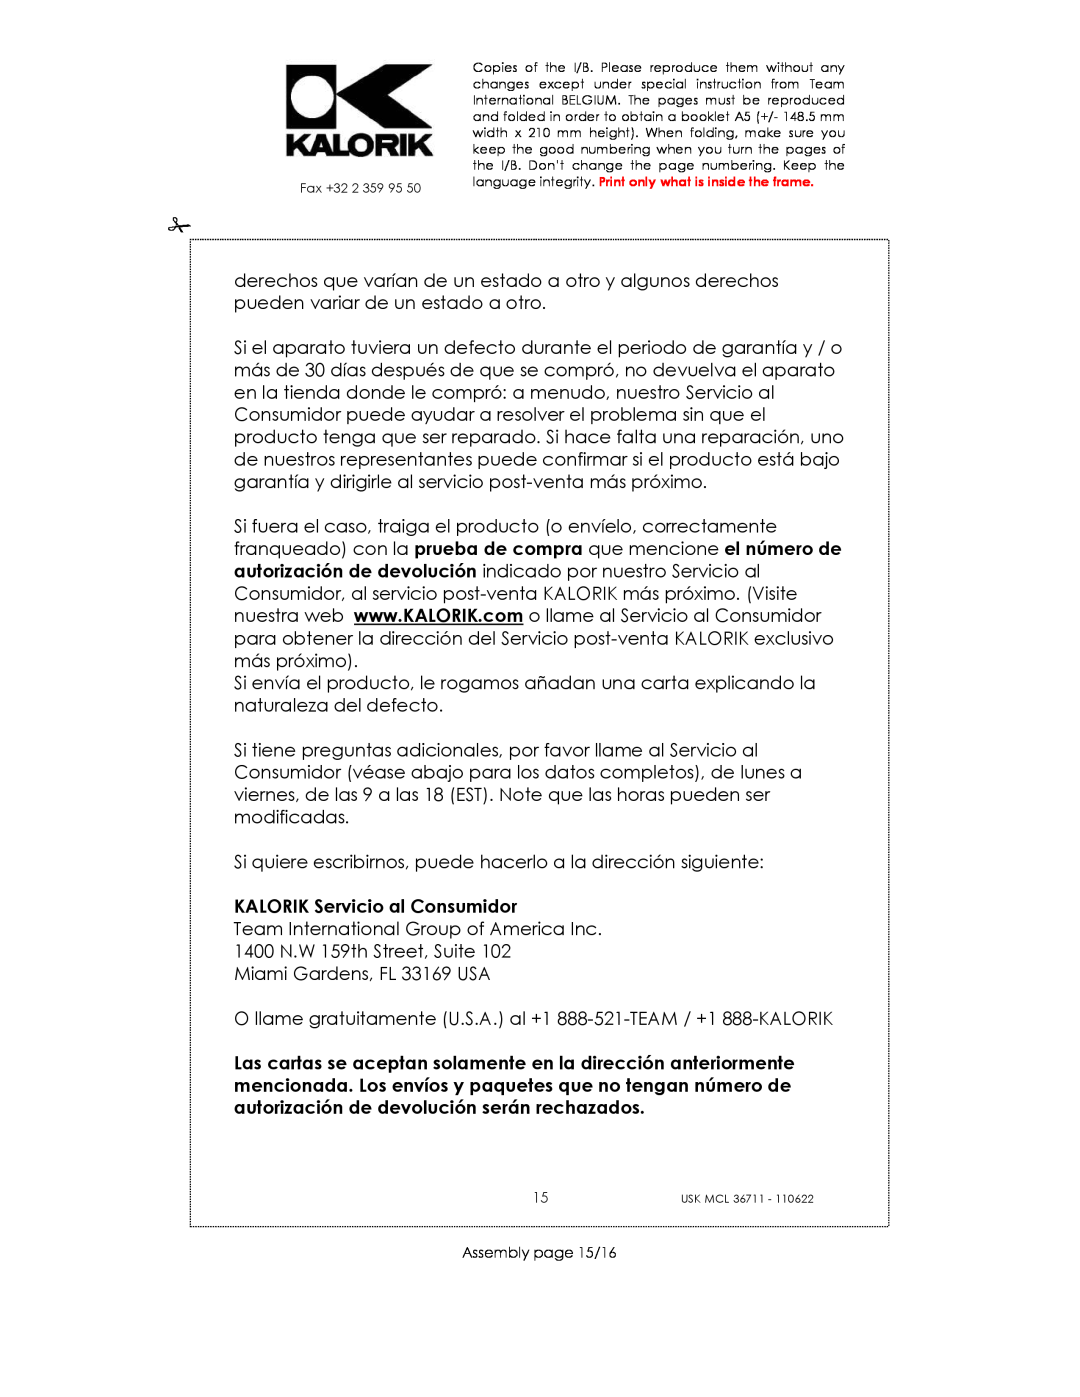 Kalorik USK MCL 36711 manual KALORIK Servicio al Consumidor, Assembly page 15/16 